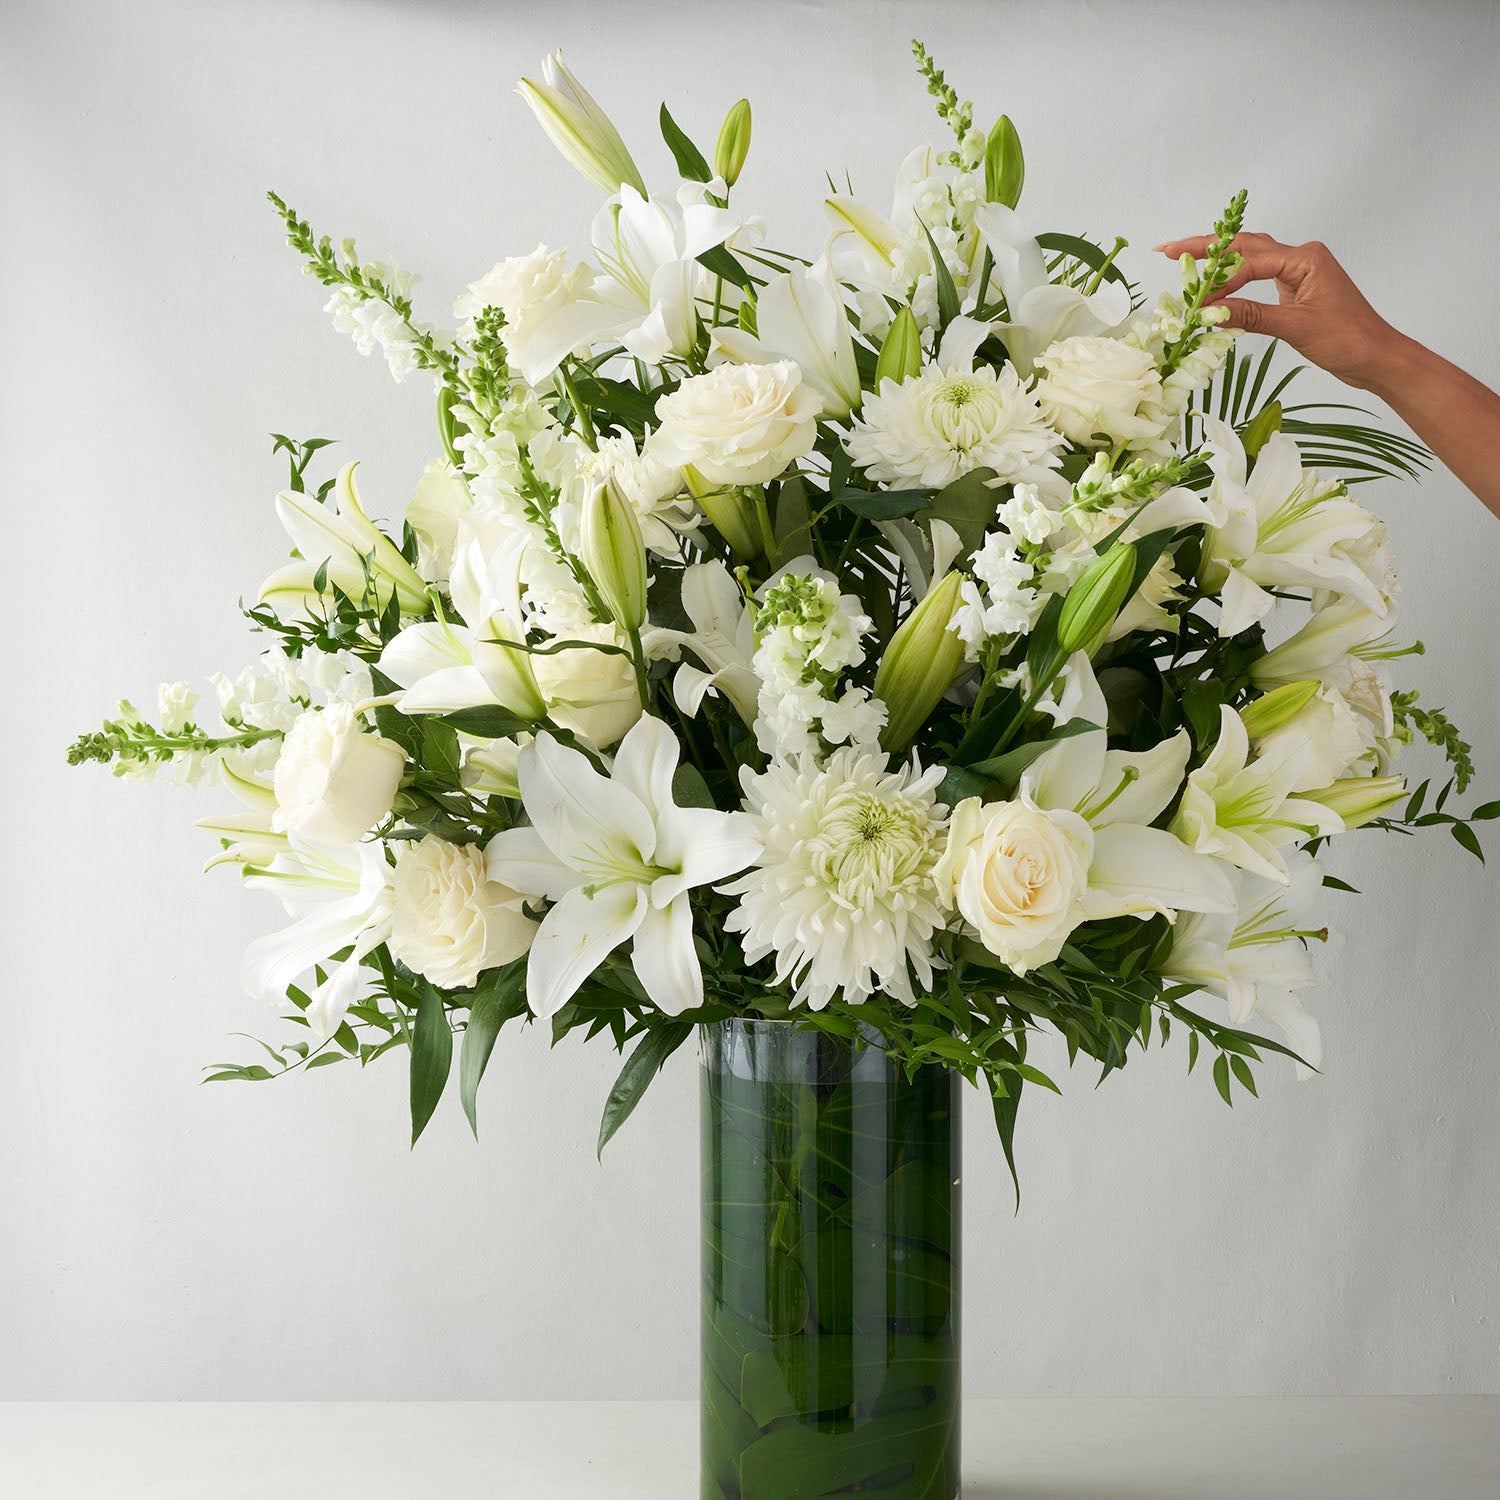 One hand adjusting flower in large glass vase full of white flowers.